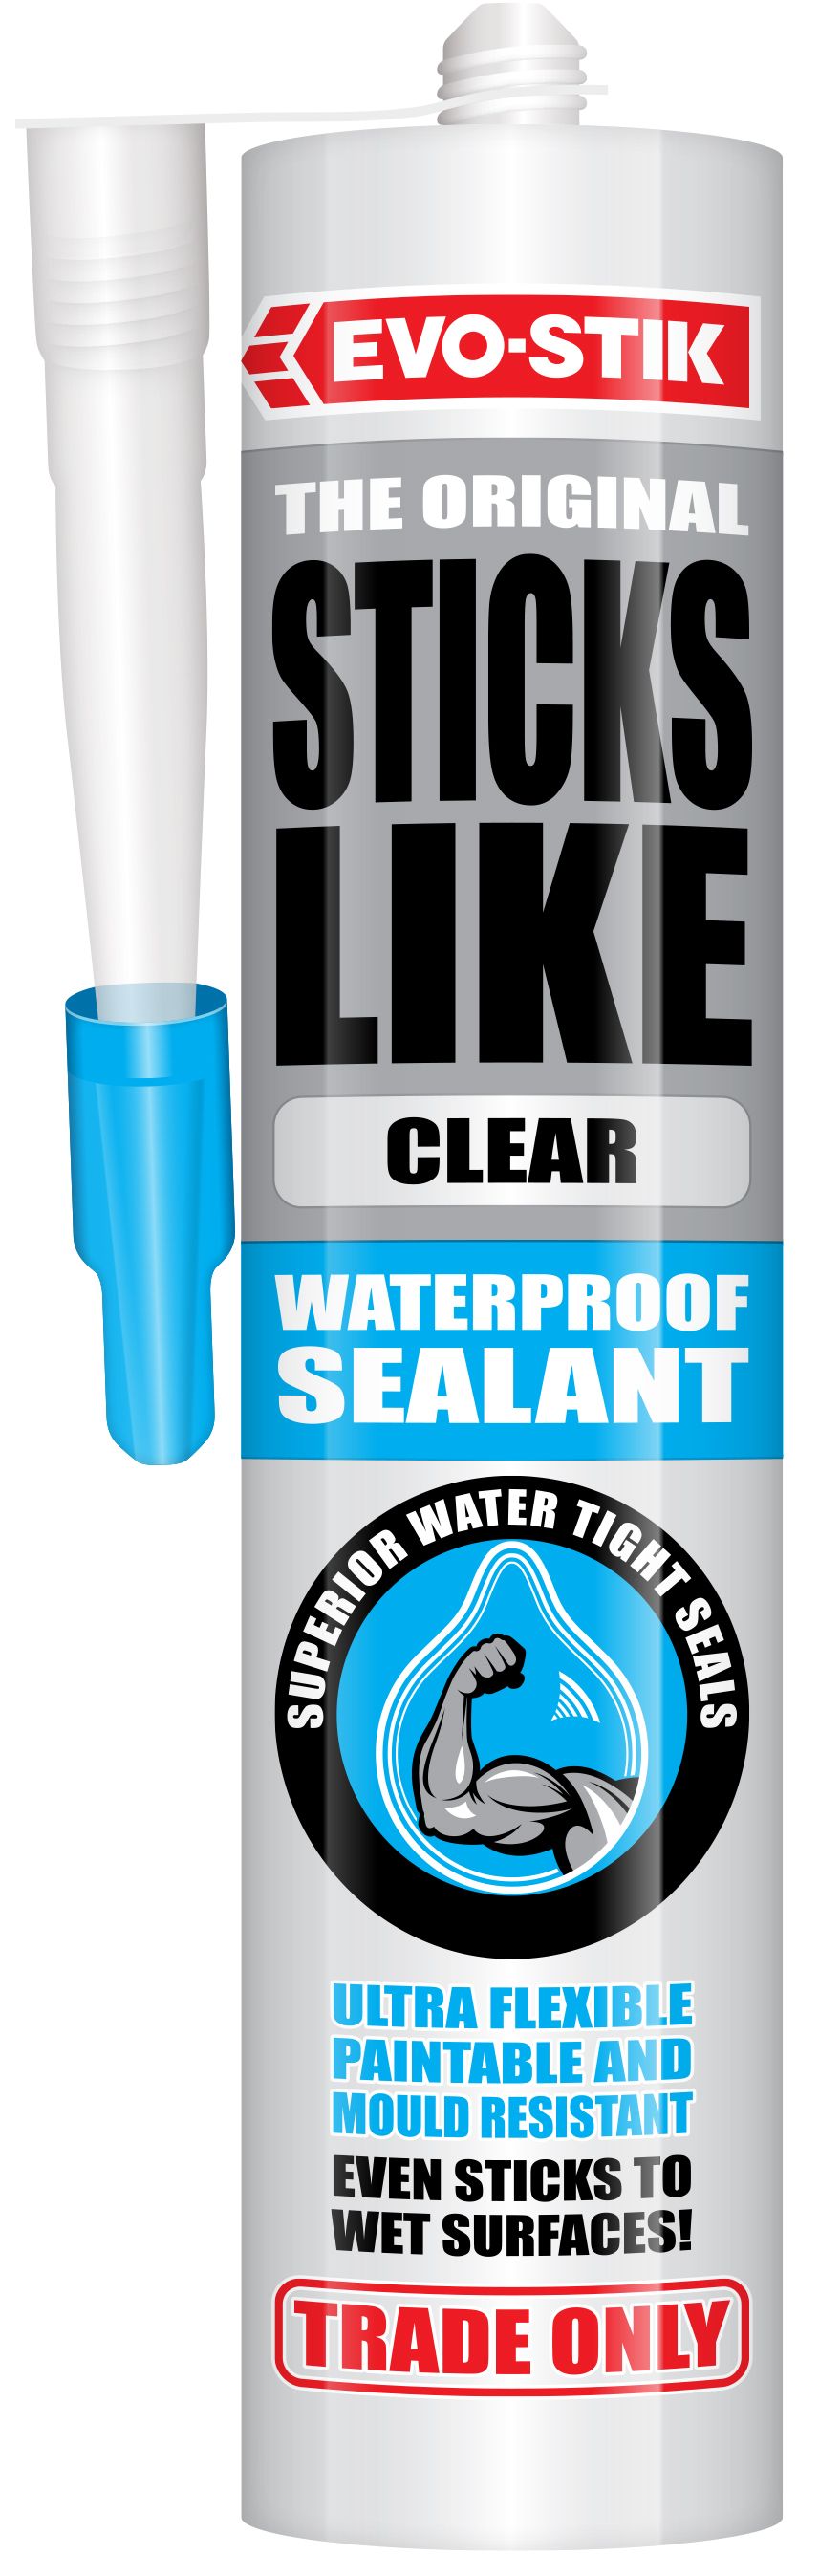 Image of Evo-Stik Sticks Like Waterproof Sealant Clear 290ml